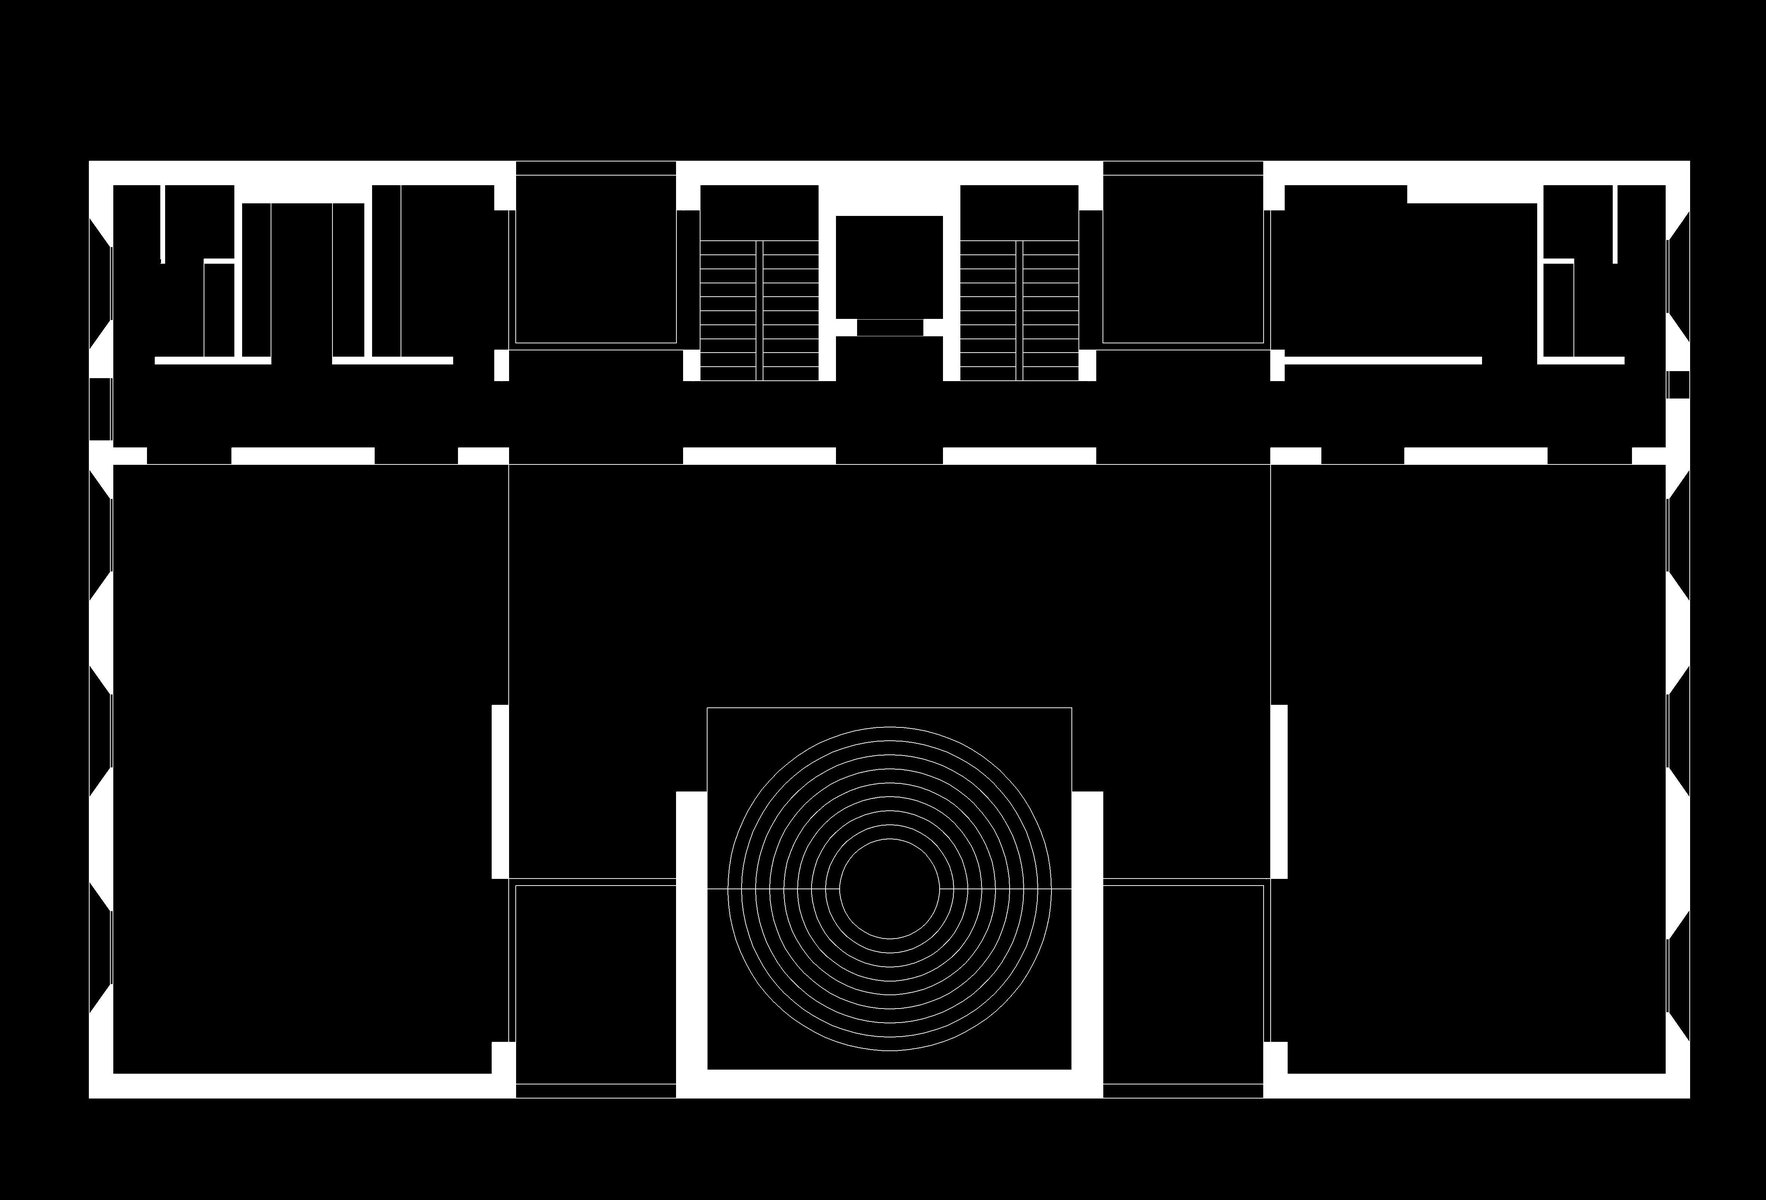 first floor plan 1.jpg